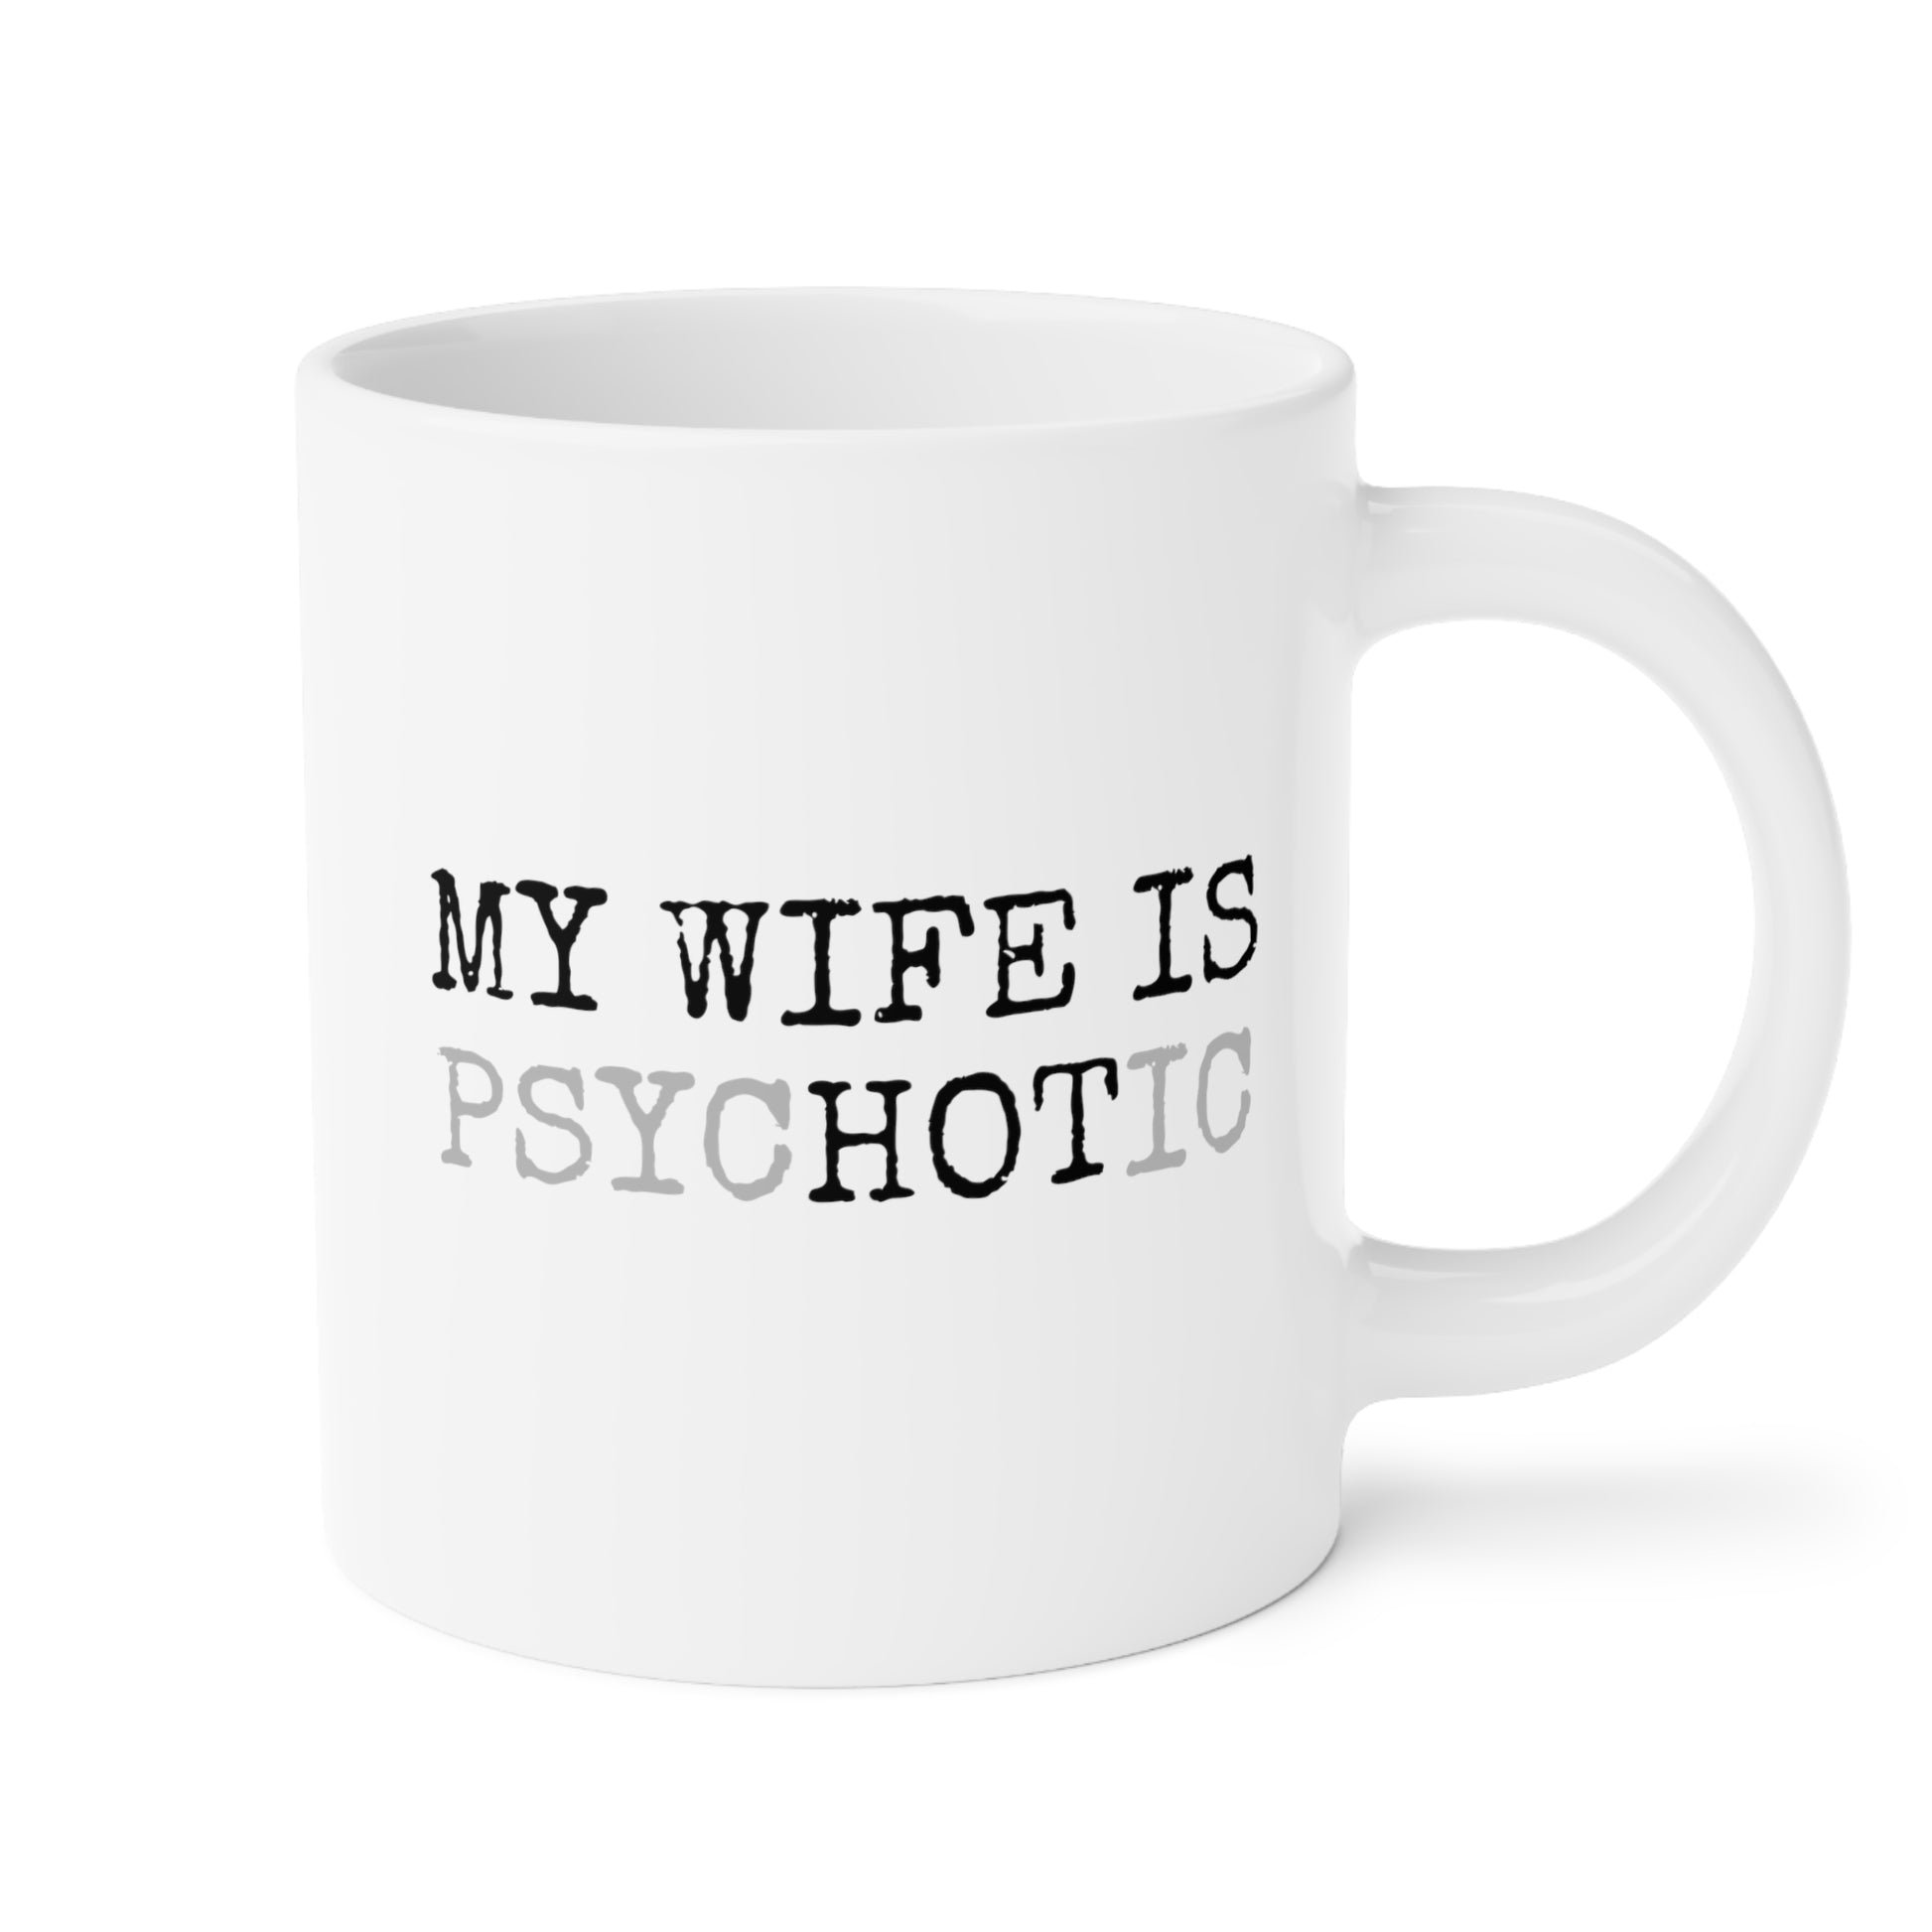 My Wife Is Hot Psychotic 20oz white funny large coffee mug gift for him boyfriend husband rude curse valentines anniversary waveywares wavey wares wavywares wavy wares